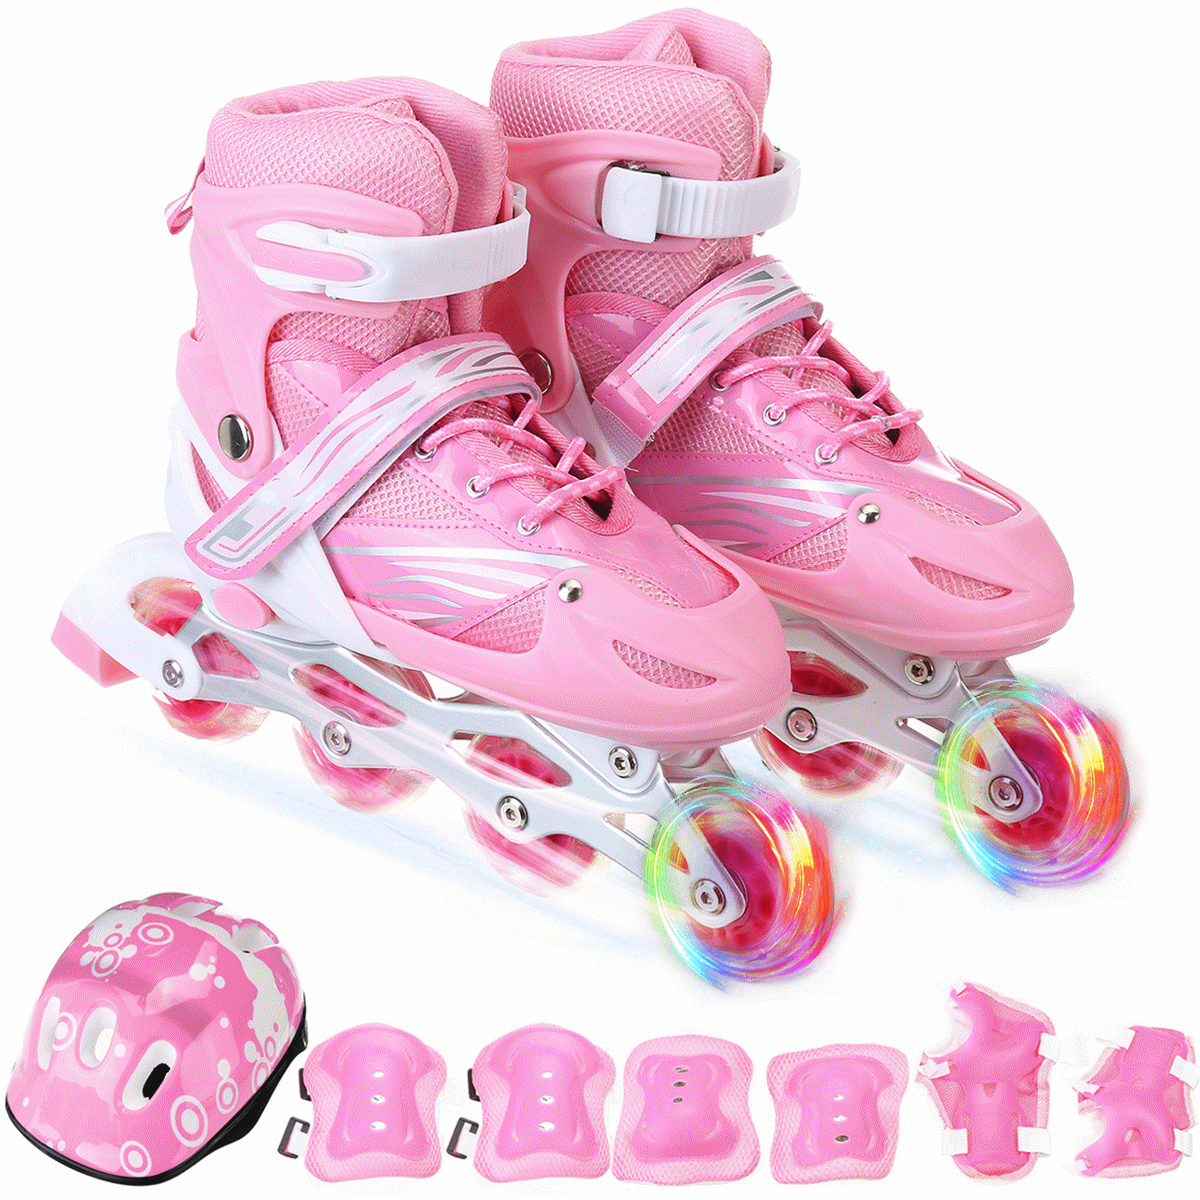 12Pcs/Set Adjustable Inline Skates with Full Light Up Wheels Kids Indoor Outdoor Illuminating Roller Skates Shoes for Beginner Girls Boys, Blue/Pink/Red